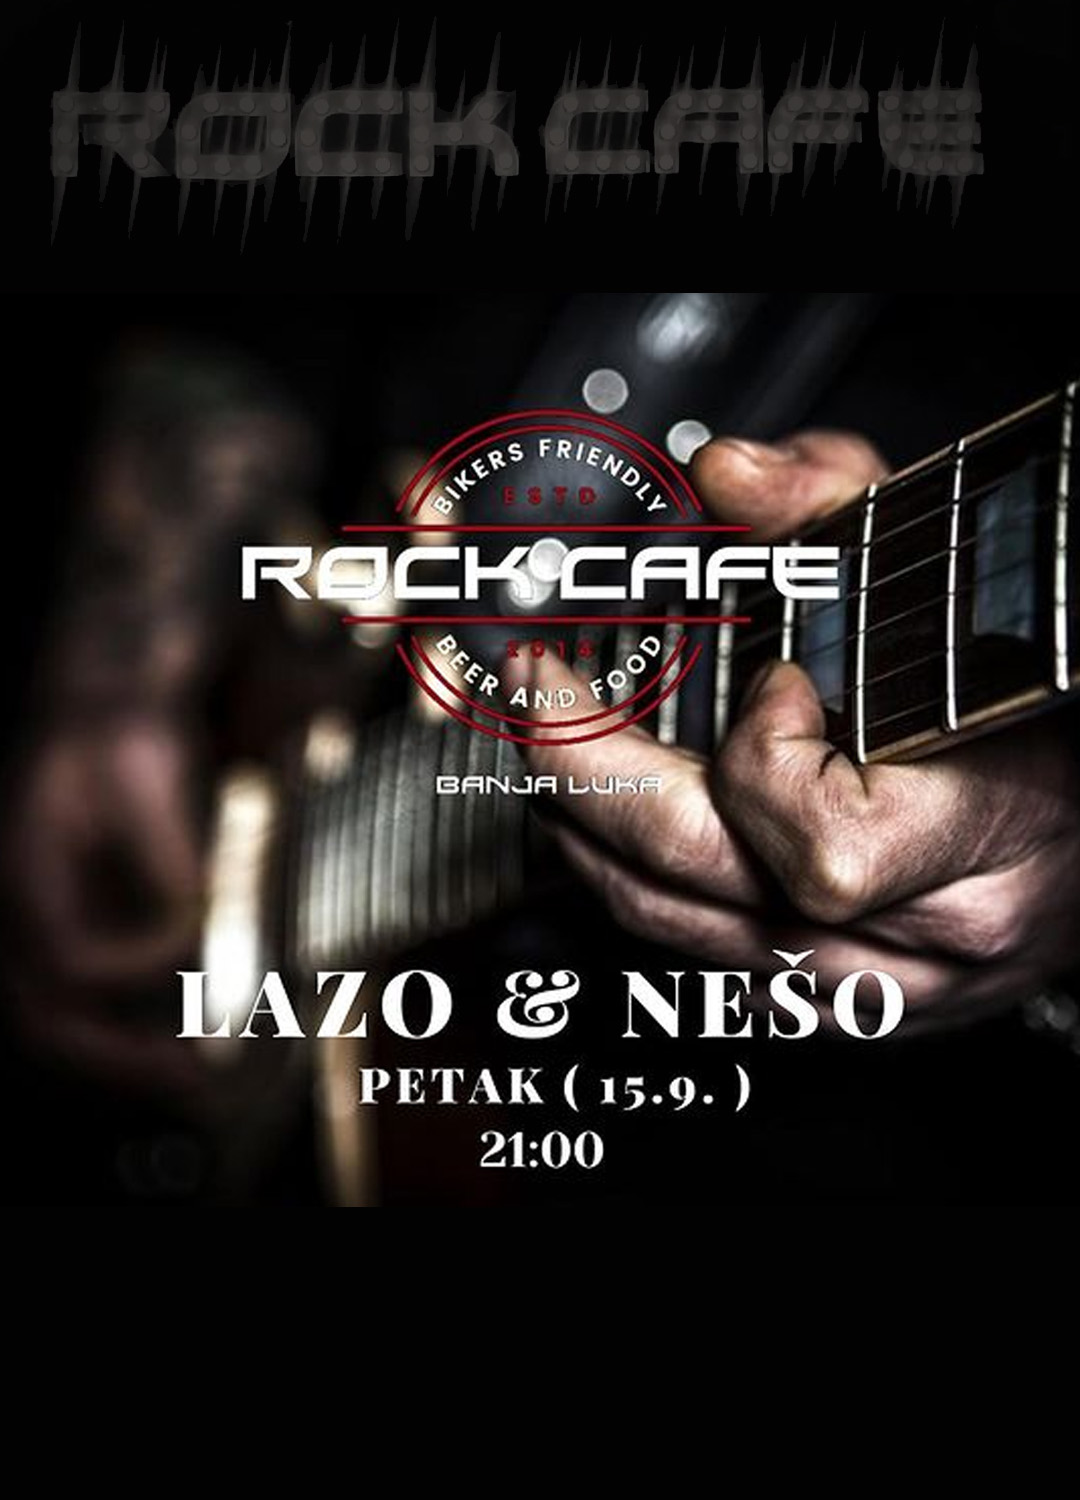 Lazo i Neso Rock cafe